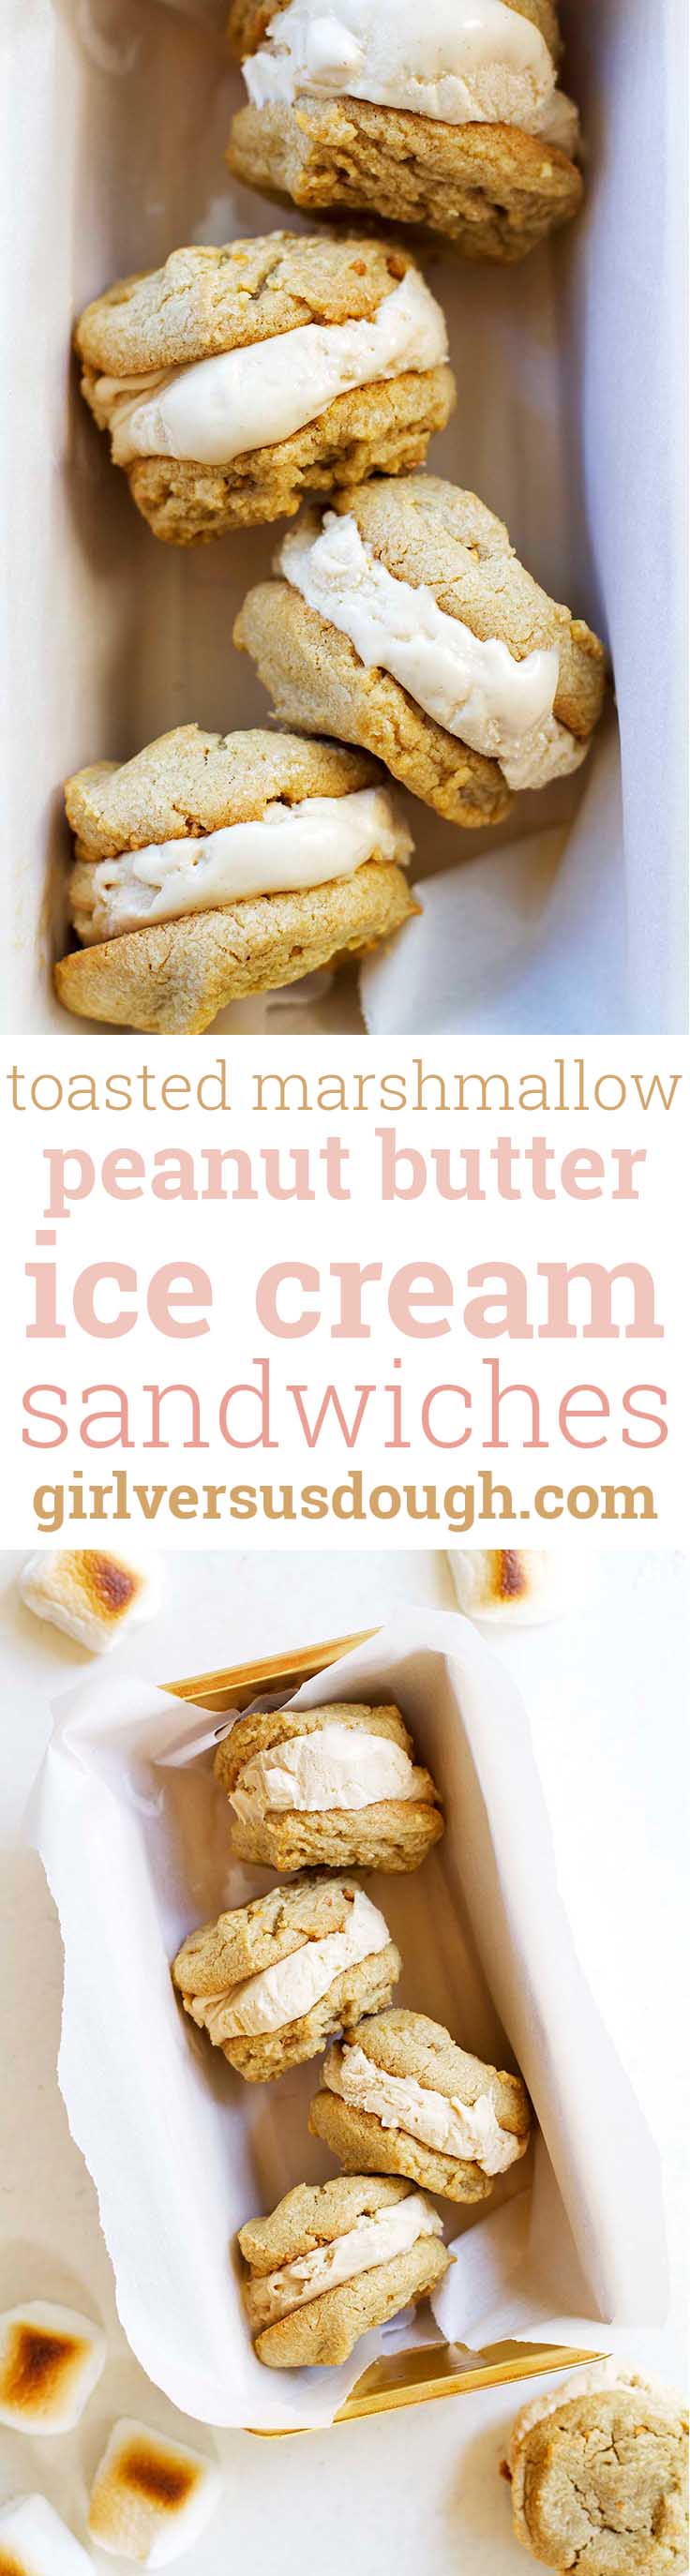 Toasted Marshmallow Peanut Butter Ice Cream Sandwiches -- Homemade toasted marshmallow peanut butter ice cream and soft peanut butter cookies sandwiched into one delicious treat. girlversusdough.com @girlversusdough